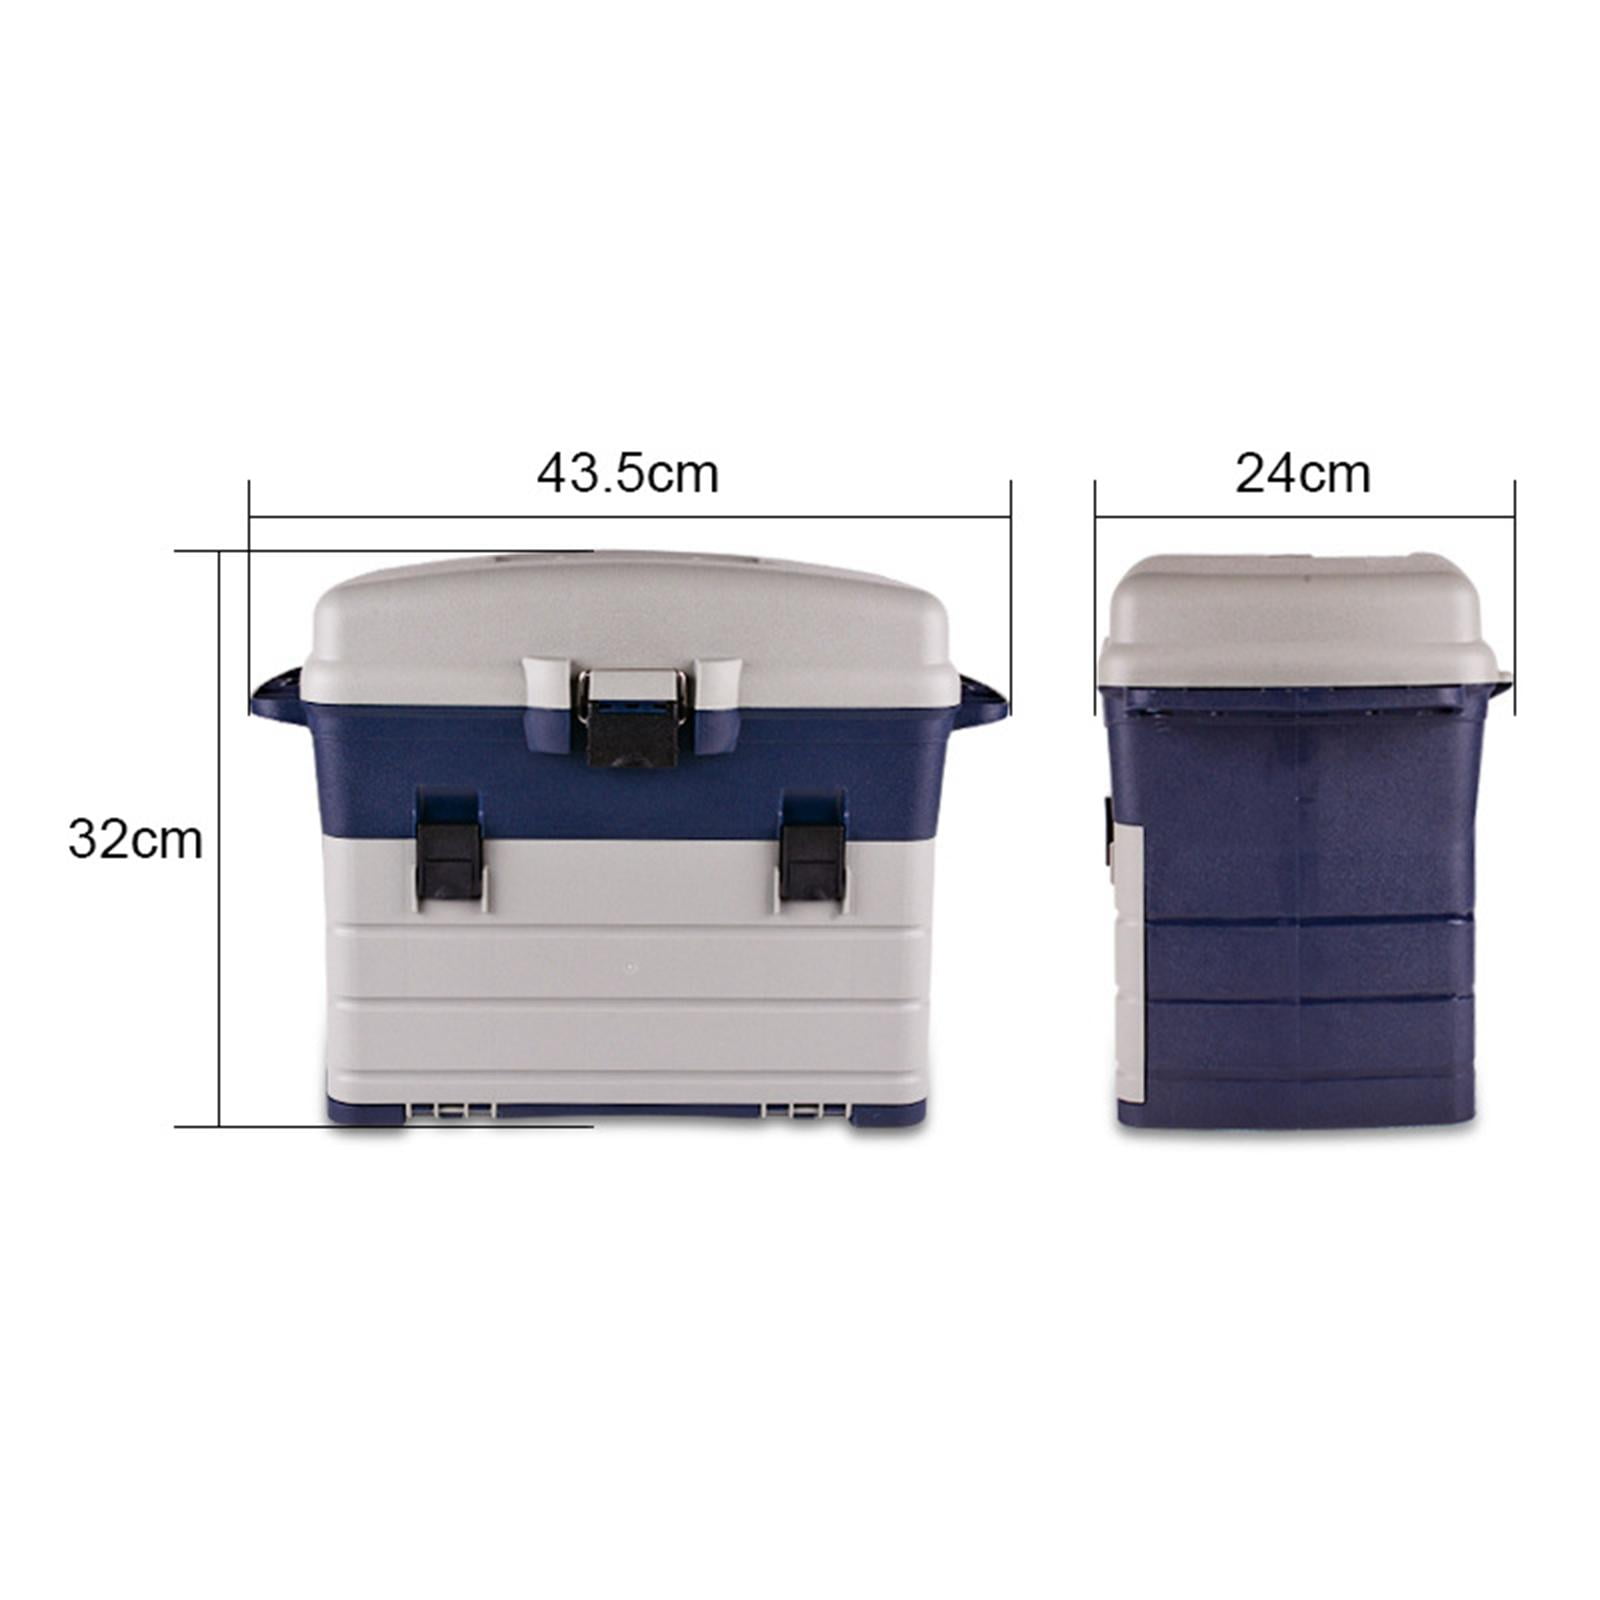  Ducurt Tackle Box Fishing Box Organizer Large Storage 4 Layers  Tacklebox : Sports & Outdoors